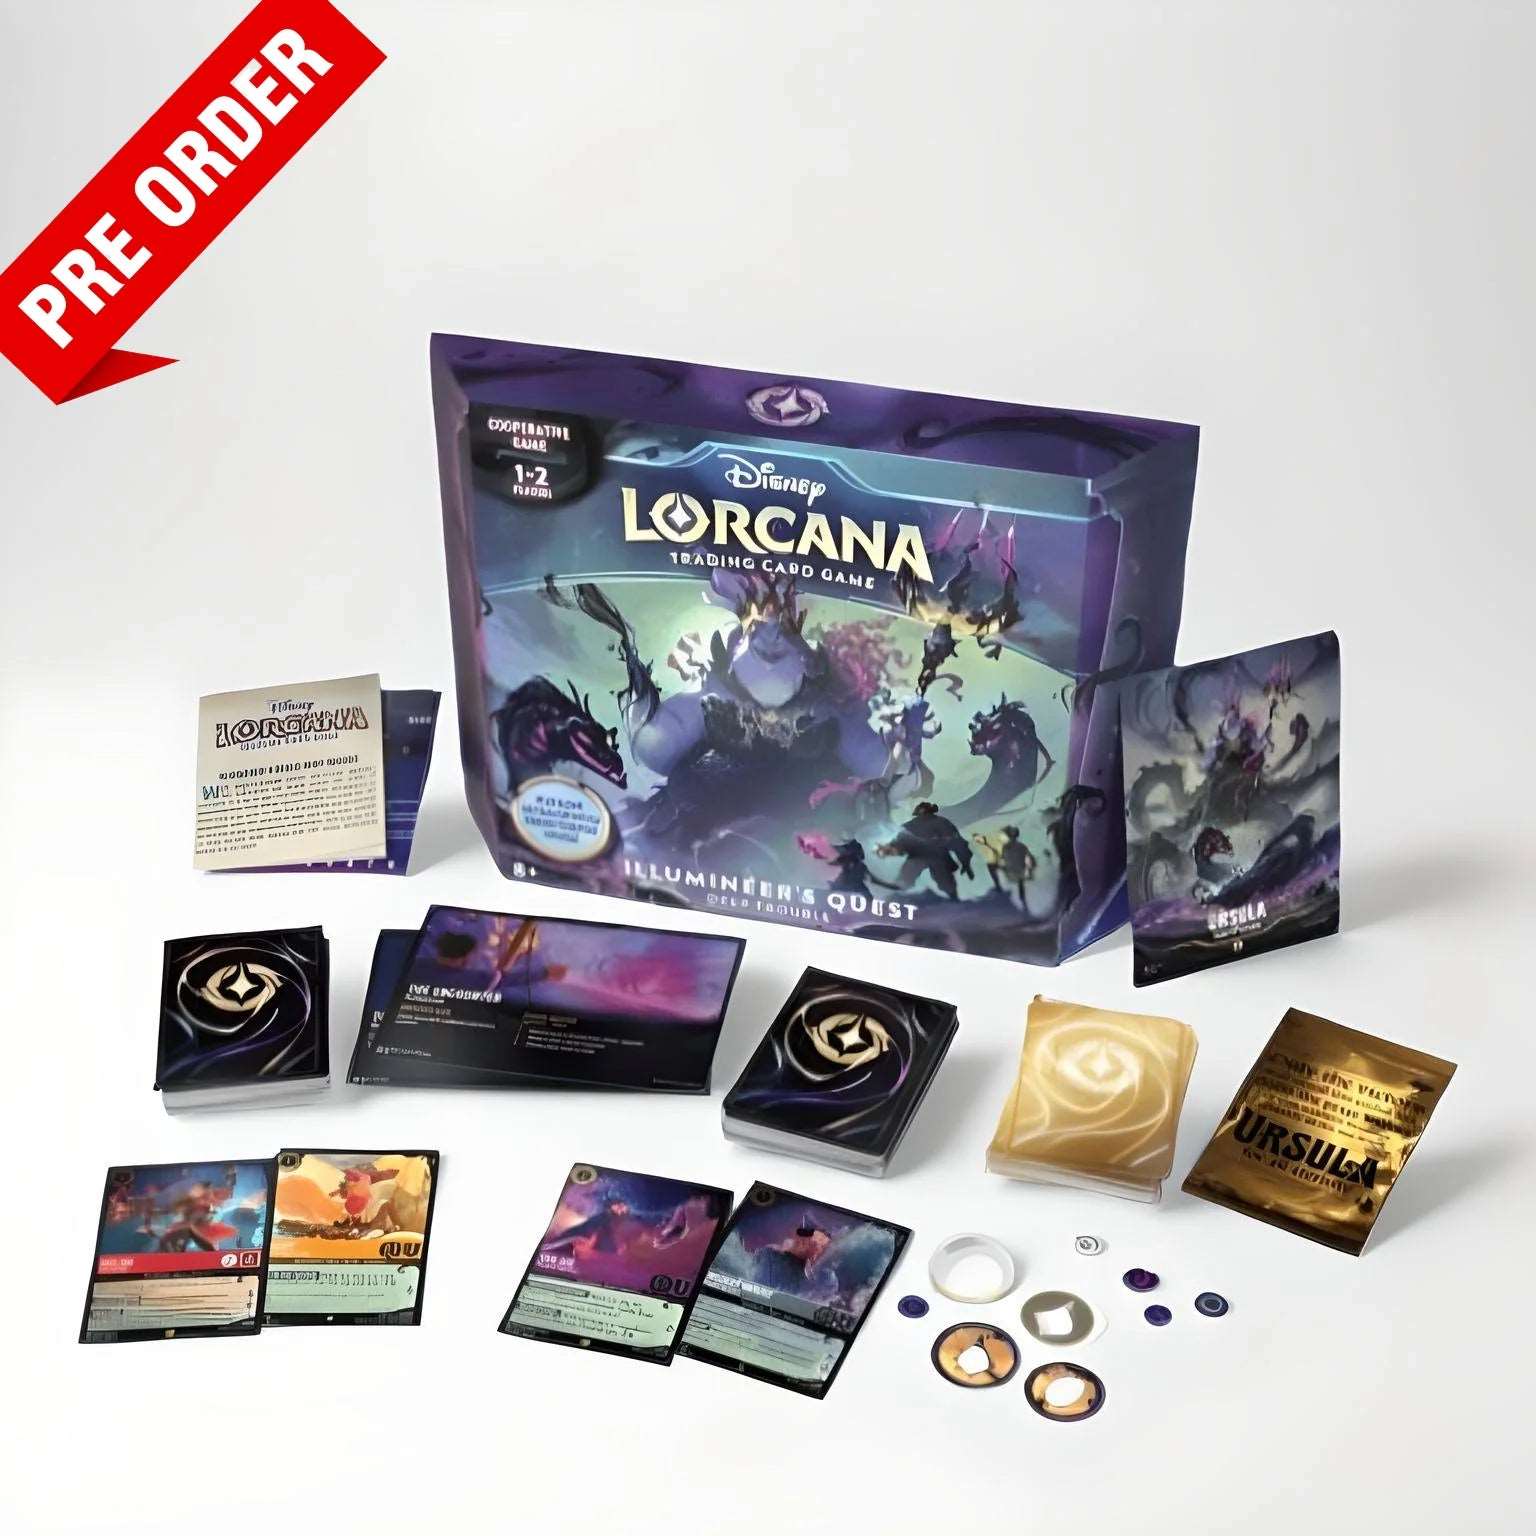 Lorcana: Ursula's Return - Embark on a Thrilling Quest!, RAVENSBURGER, DISNEY LORCANA, disney-lorcana-tcg-ursula-s-return-illumineer-s-quest-pre-order, , Dark Ninja Gaming LA